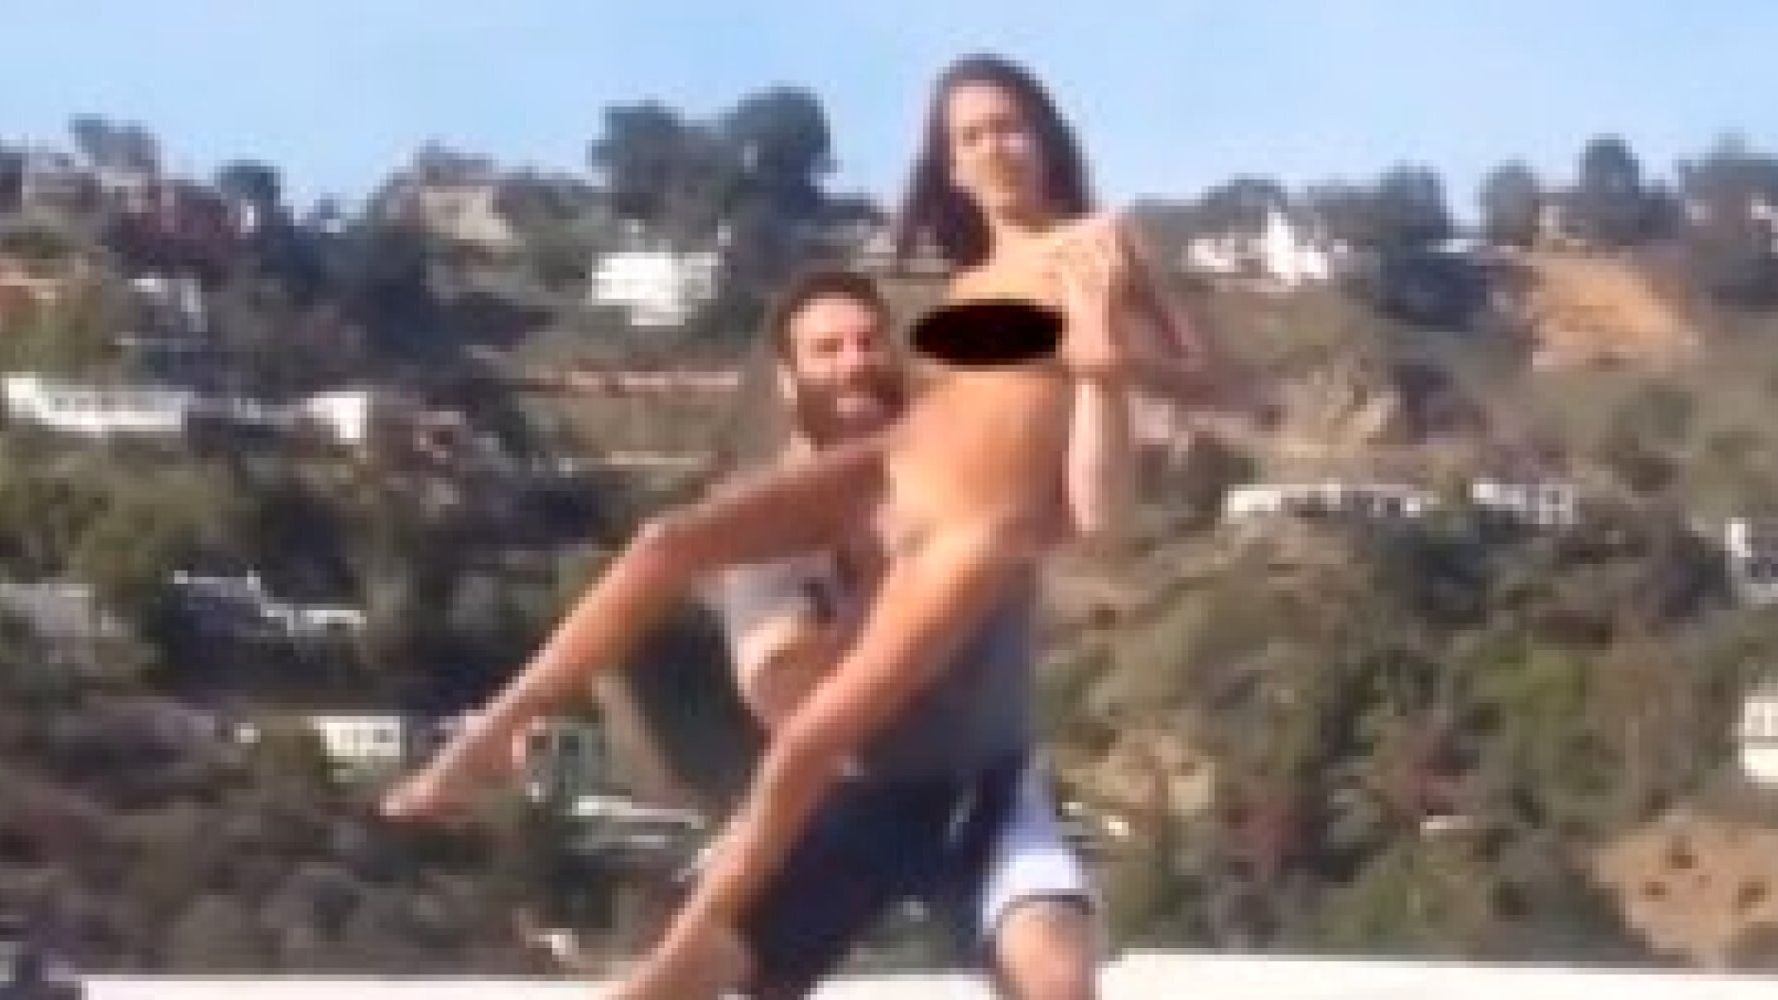 Iqra Ziz Porn - Naked Porn Star Janice Griffith Breaks Foot After Instagram Playboy Dan  Bilzerian Hurls Her Off Roof (VIDEO) | HuffPost UK News